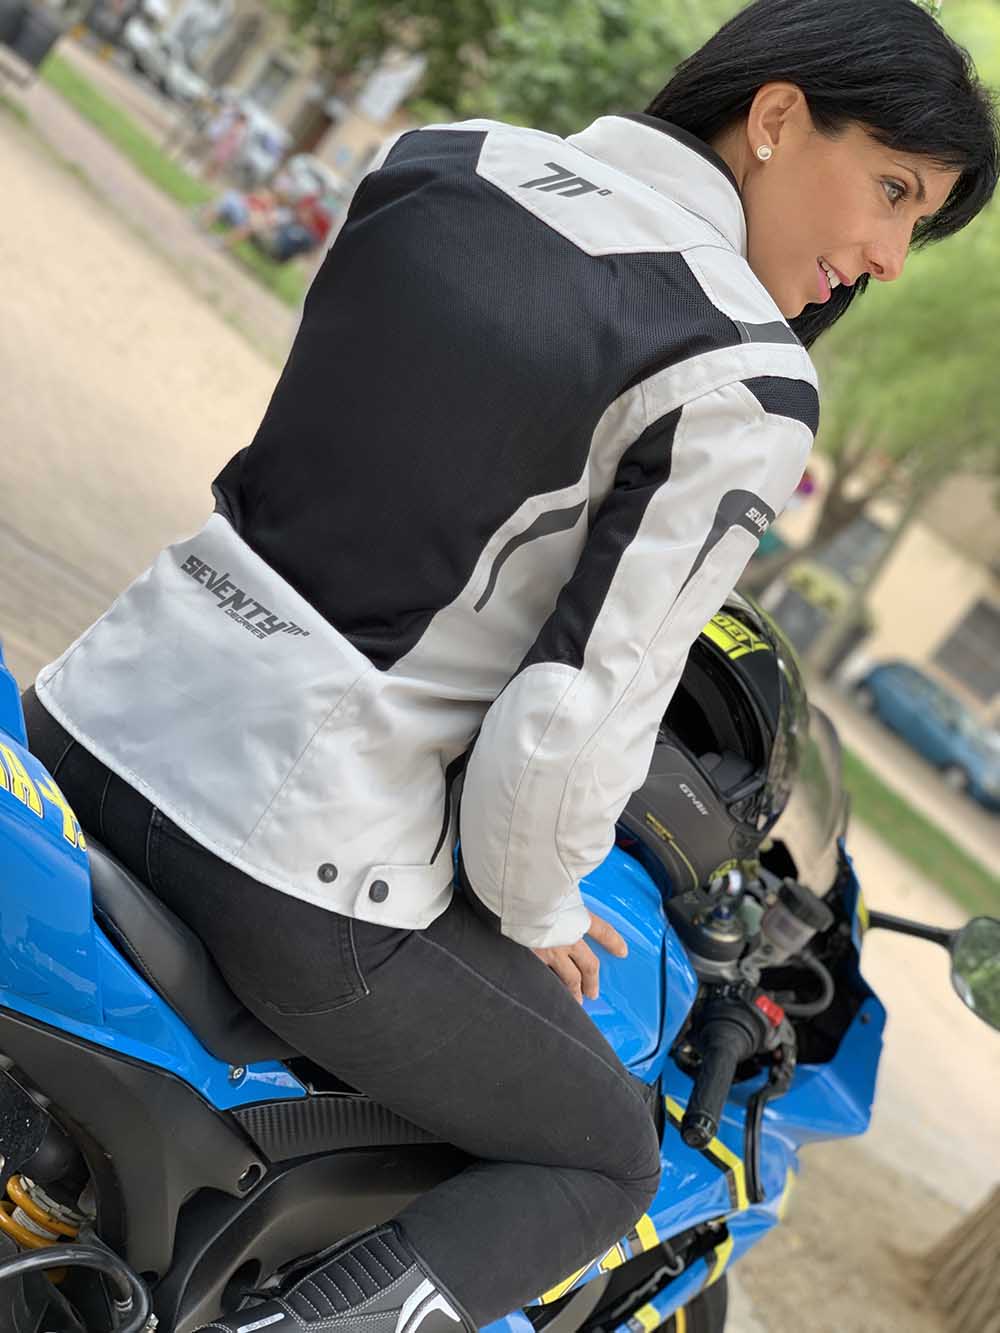 chaqueta de moto mujer, chaqueta cordura moto, outfit verano, ropa de moto de verano, chaqueta moto transpirable